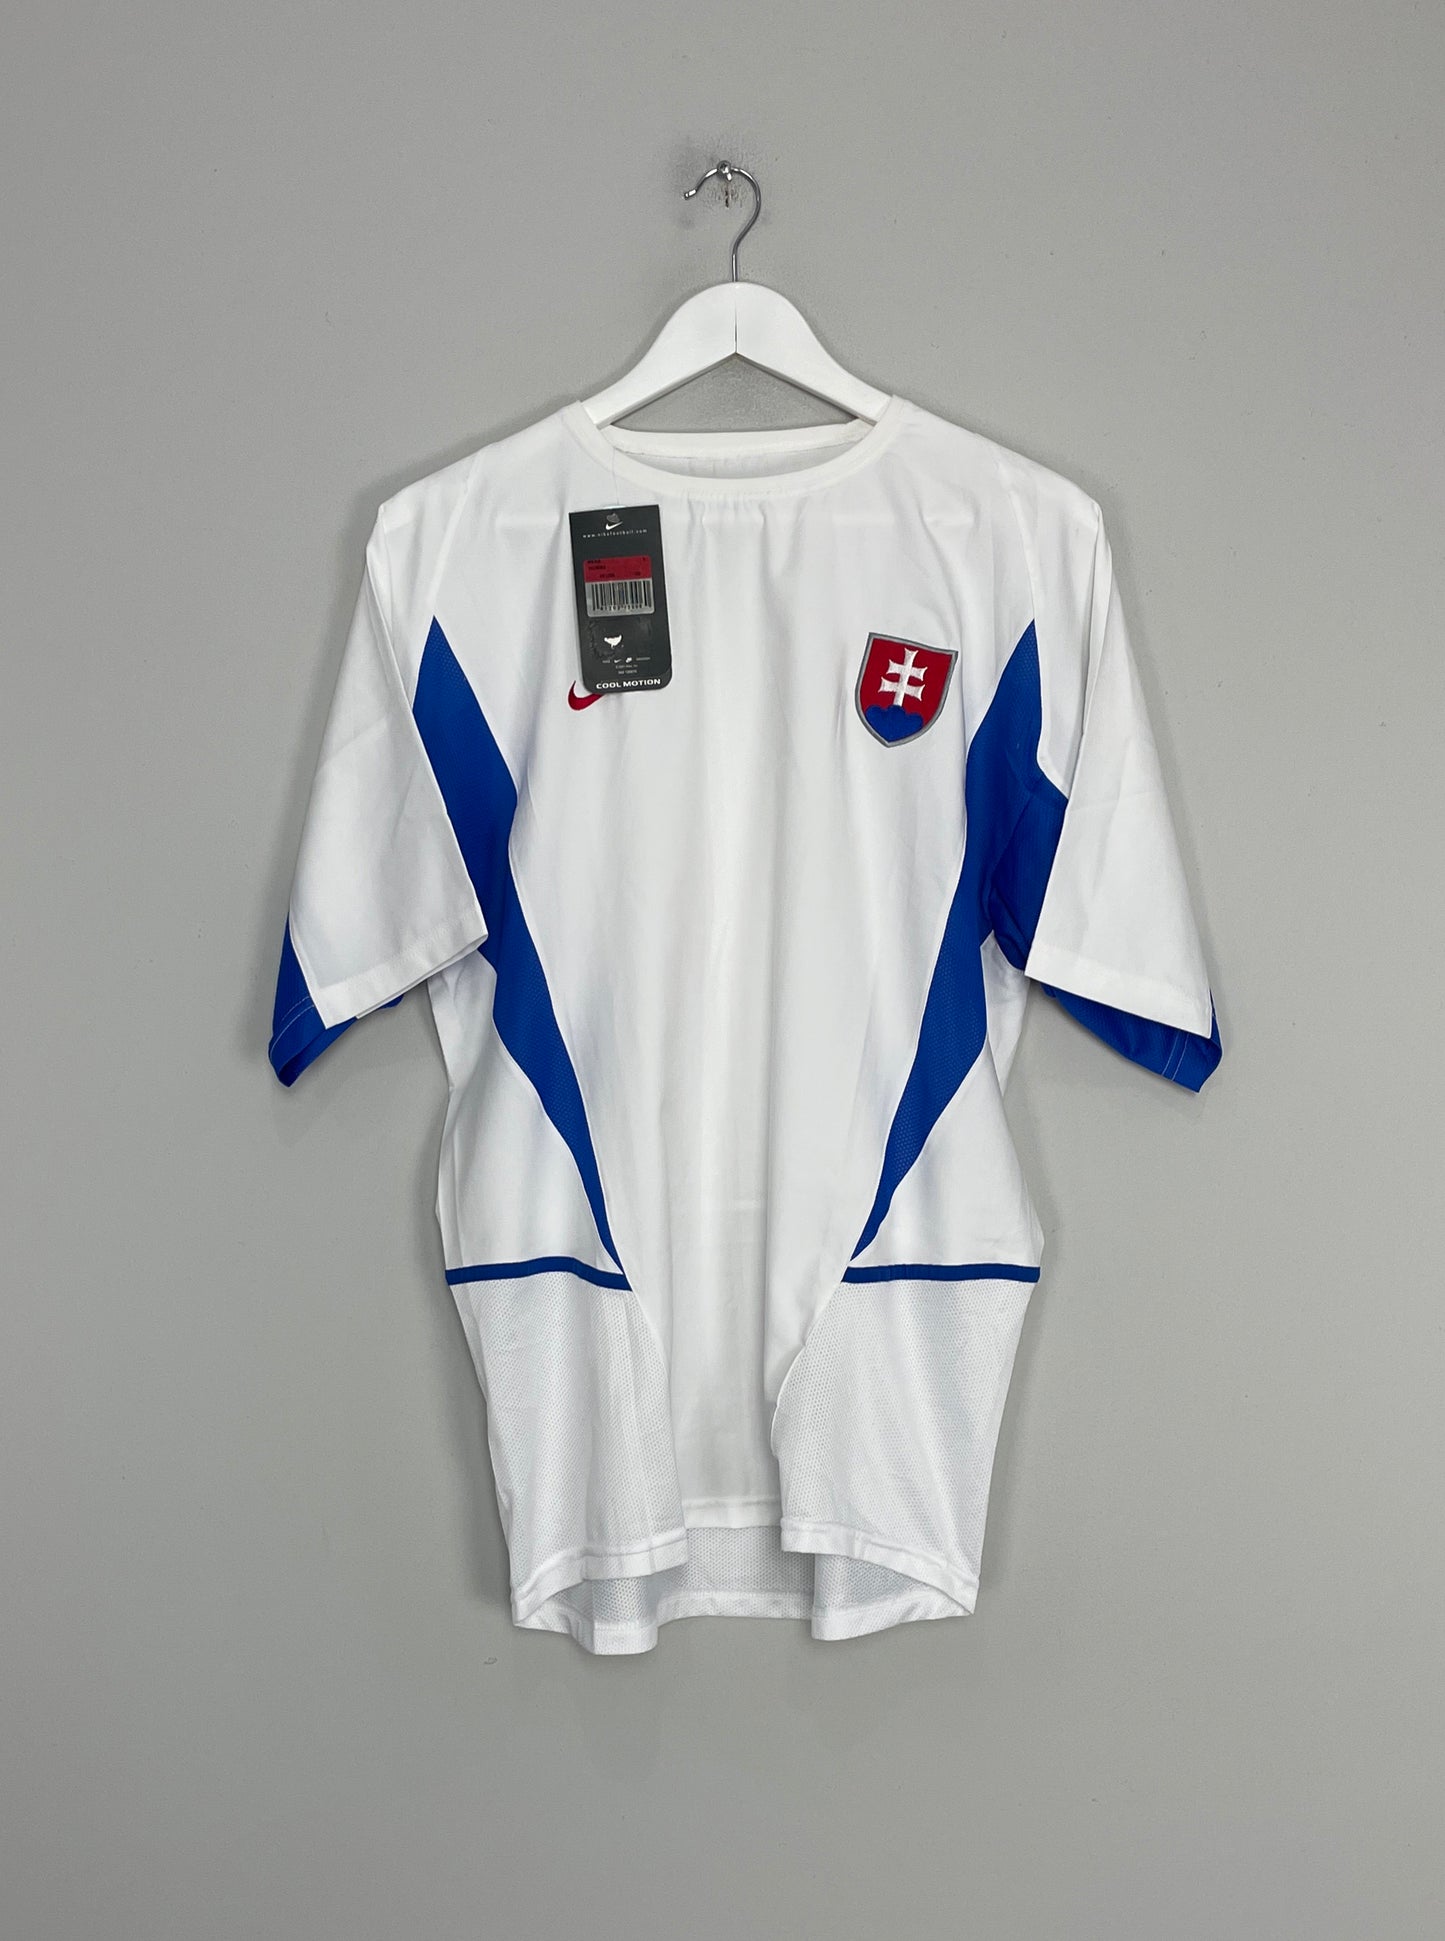 Image of the Slovakia shirt from the 2002/04 season